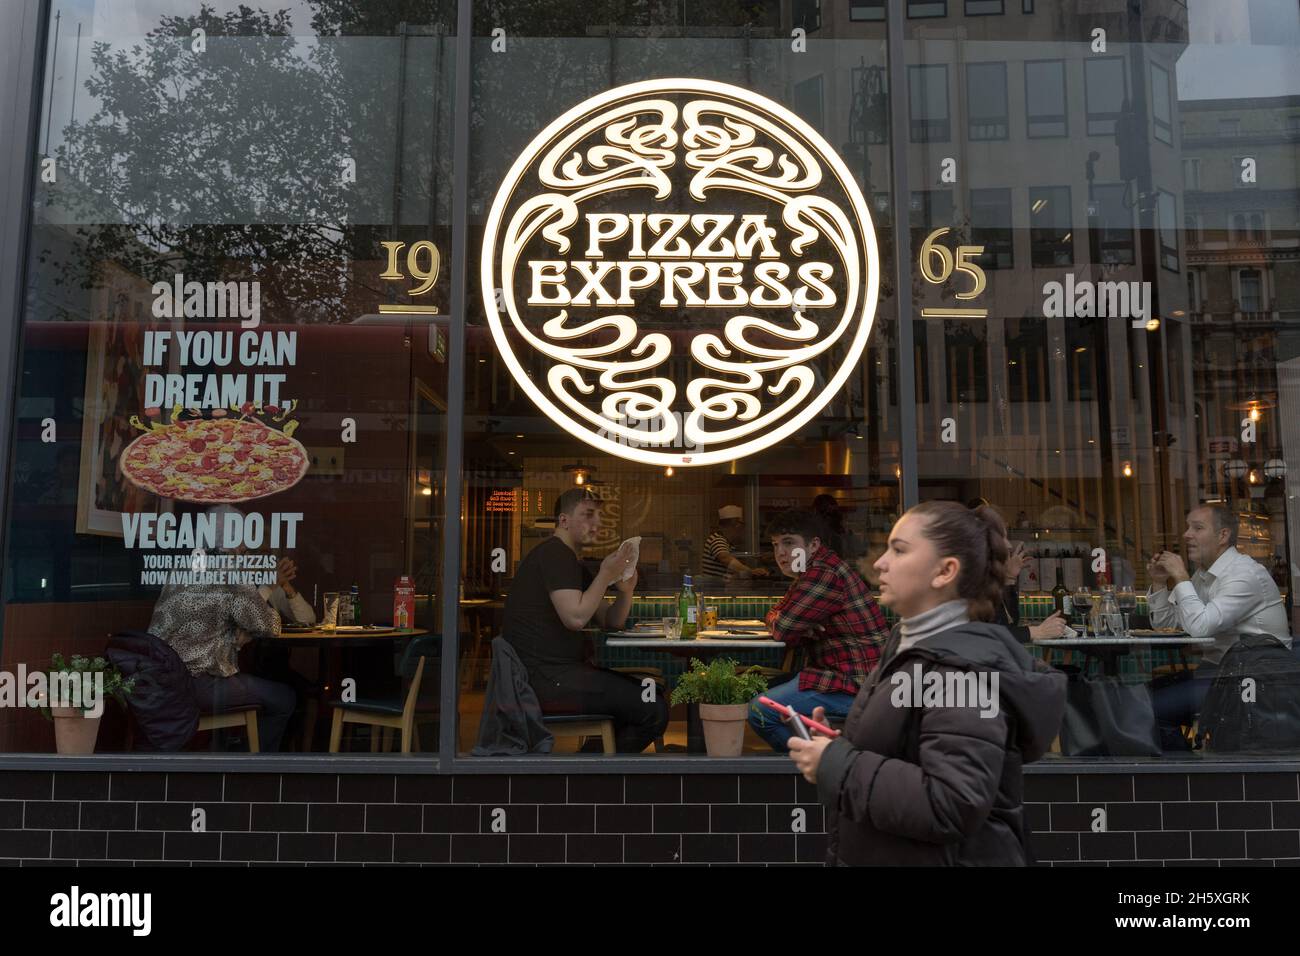 Pizza express restaurant near Trafalgar square London England UK Stock Photo